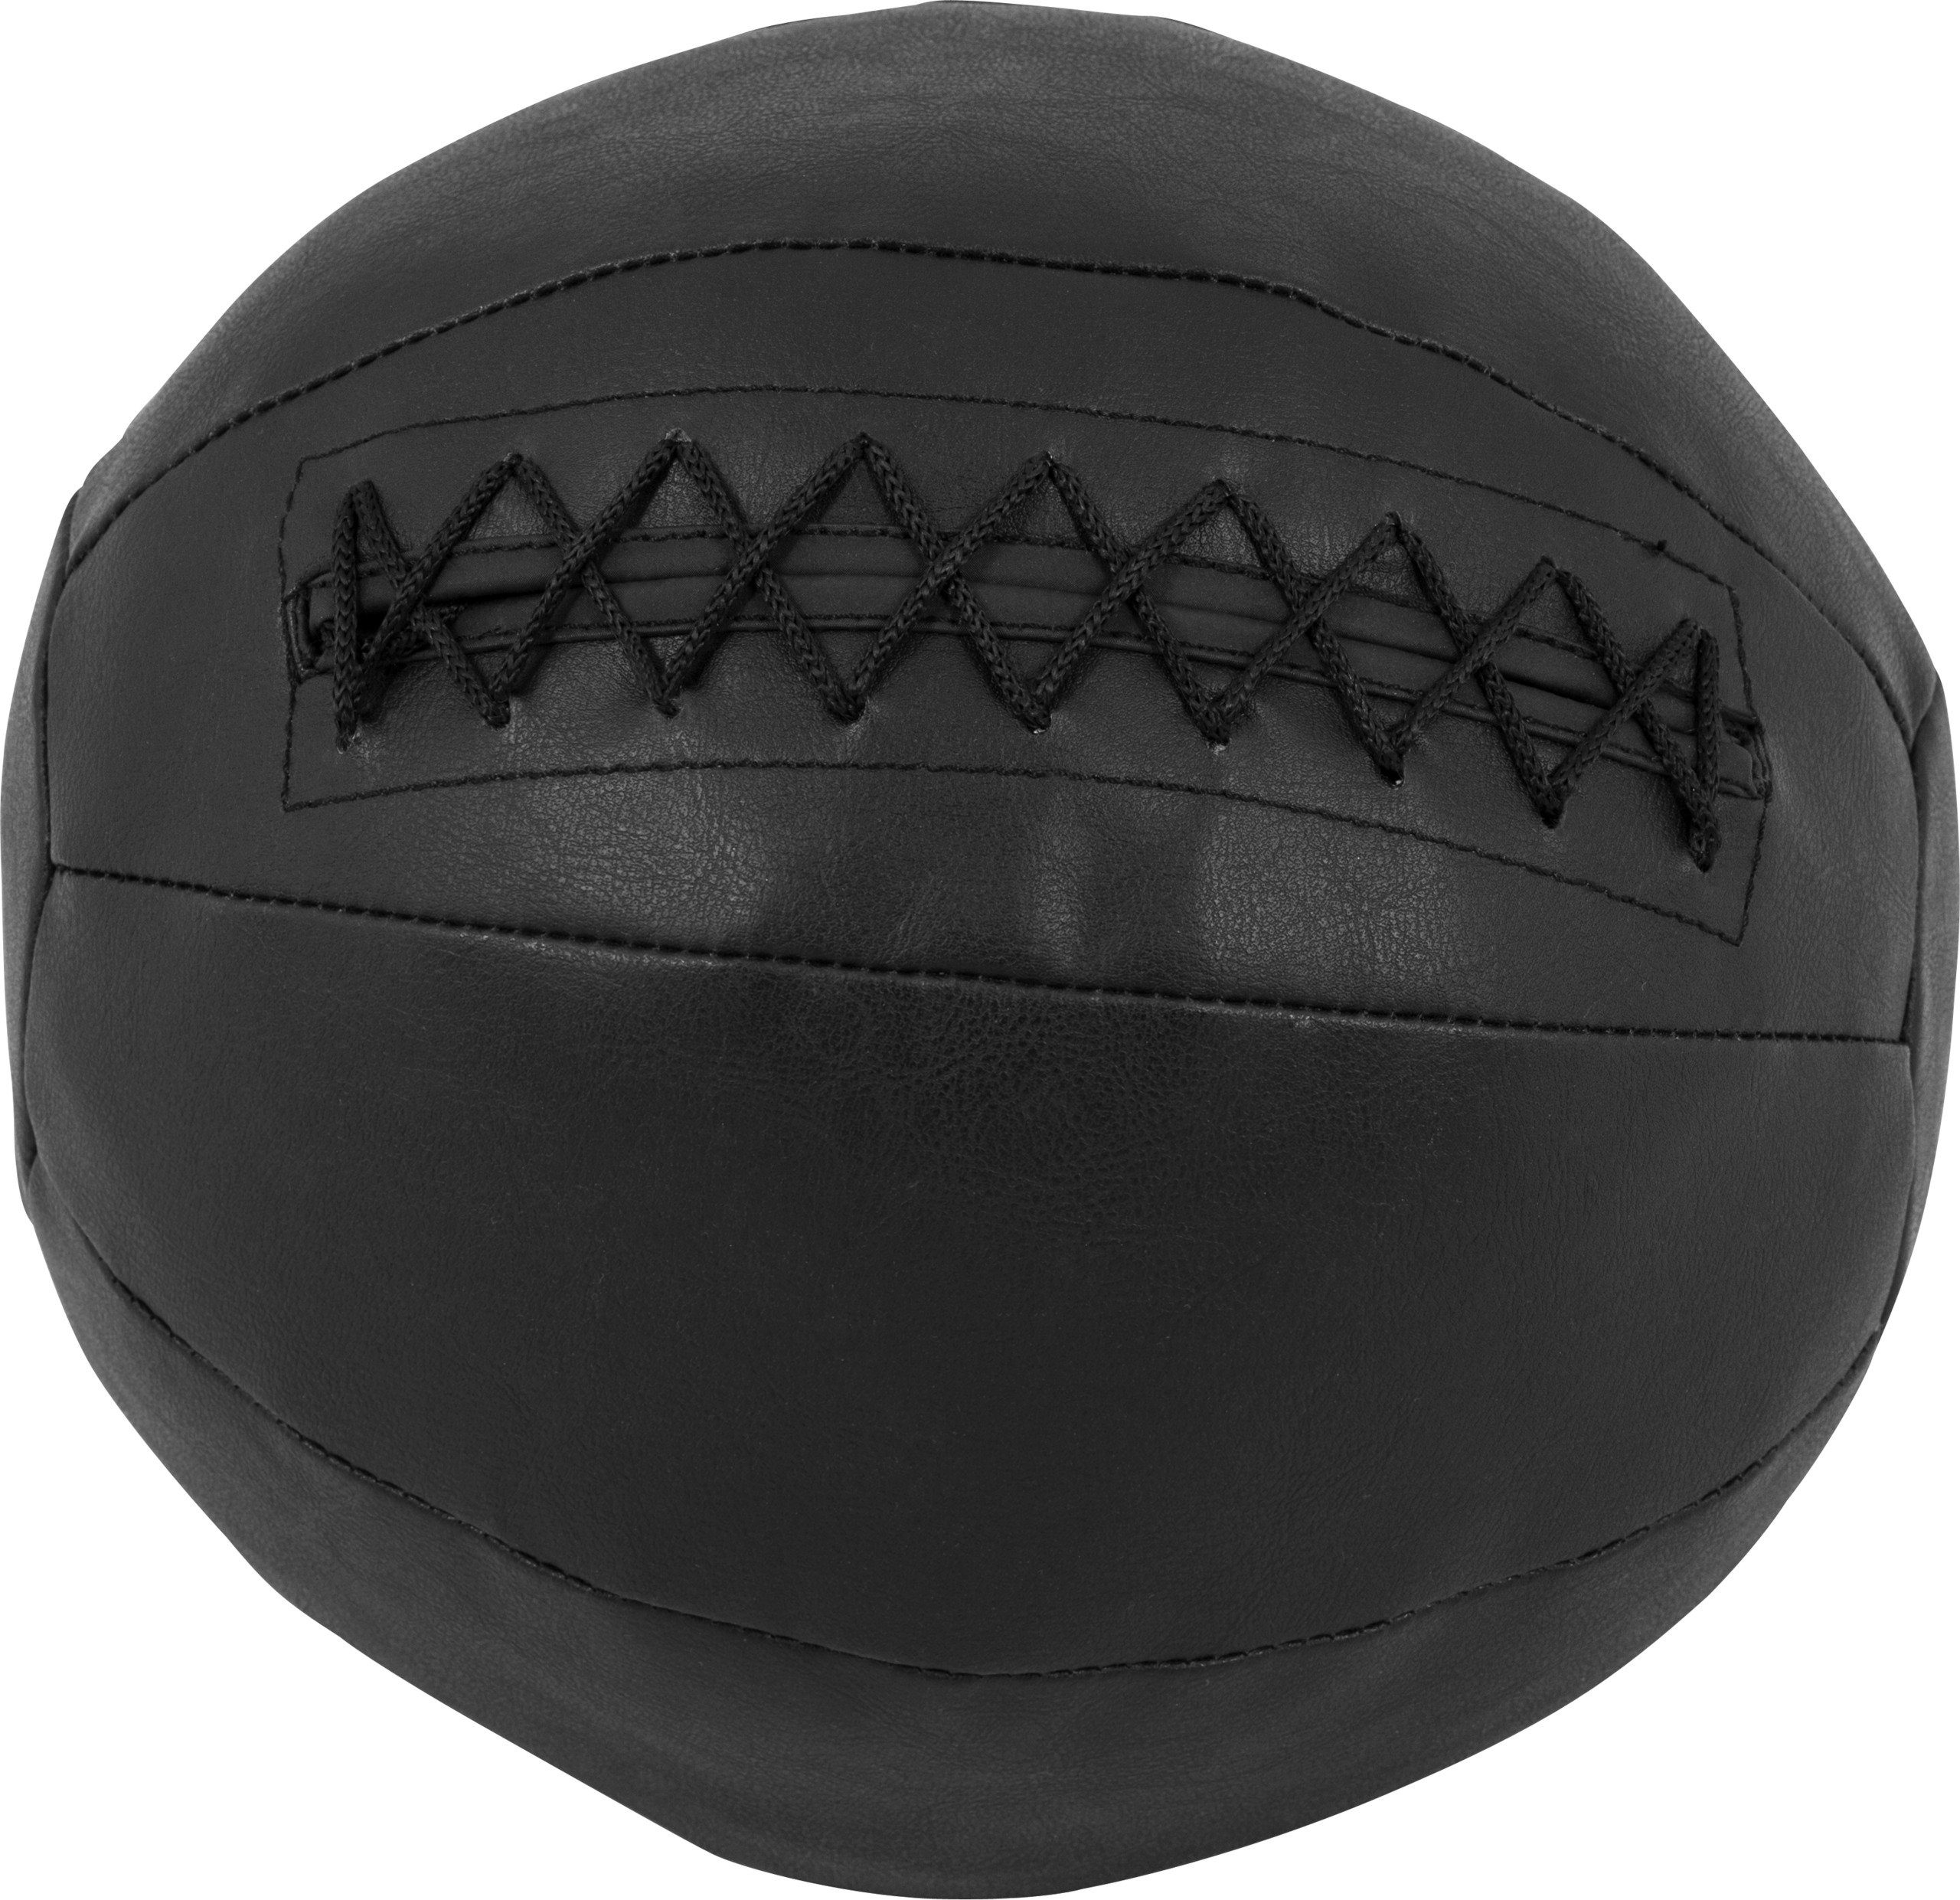 GORILLA SPORTS 29cm, aus 2 Trainingsball, Gewichtsball kg Einzeln/Set, Medizinball Leder, Fitnessball